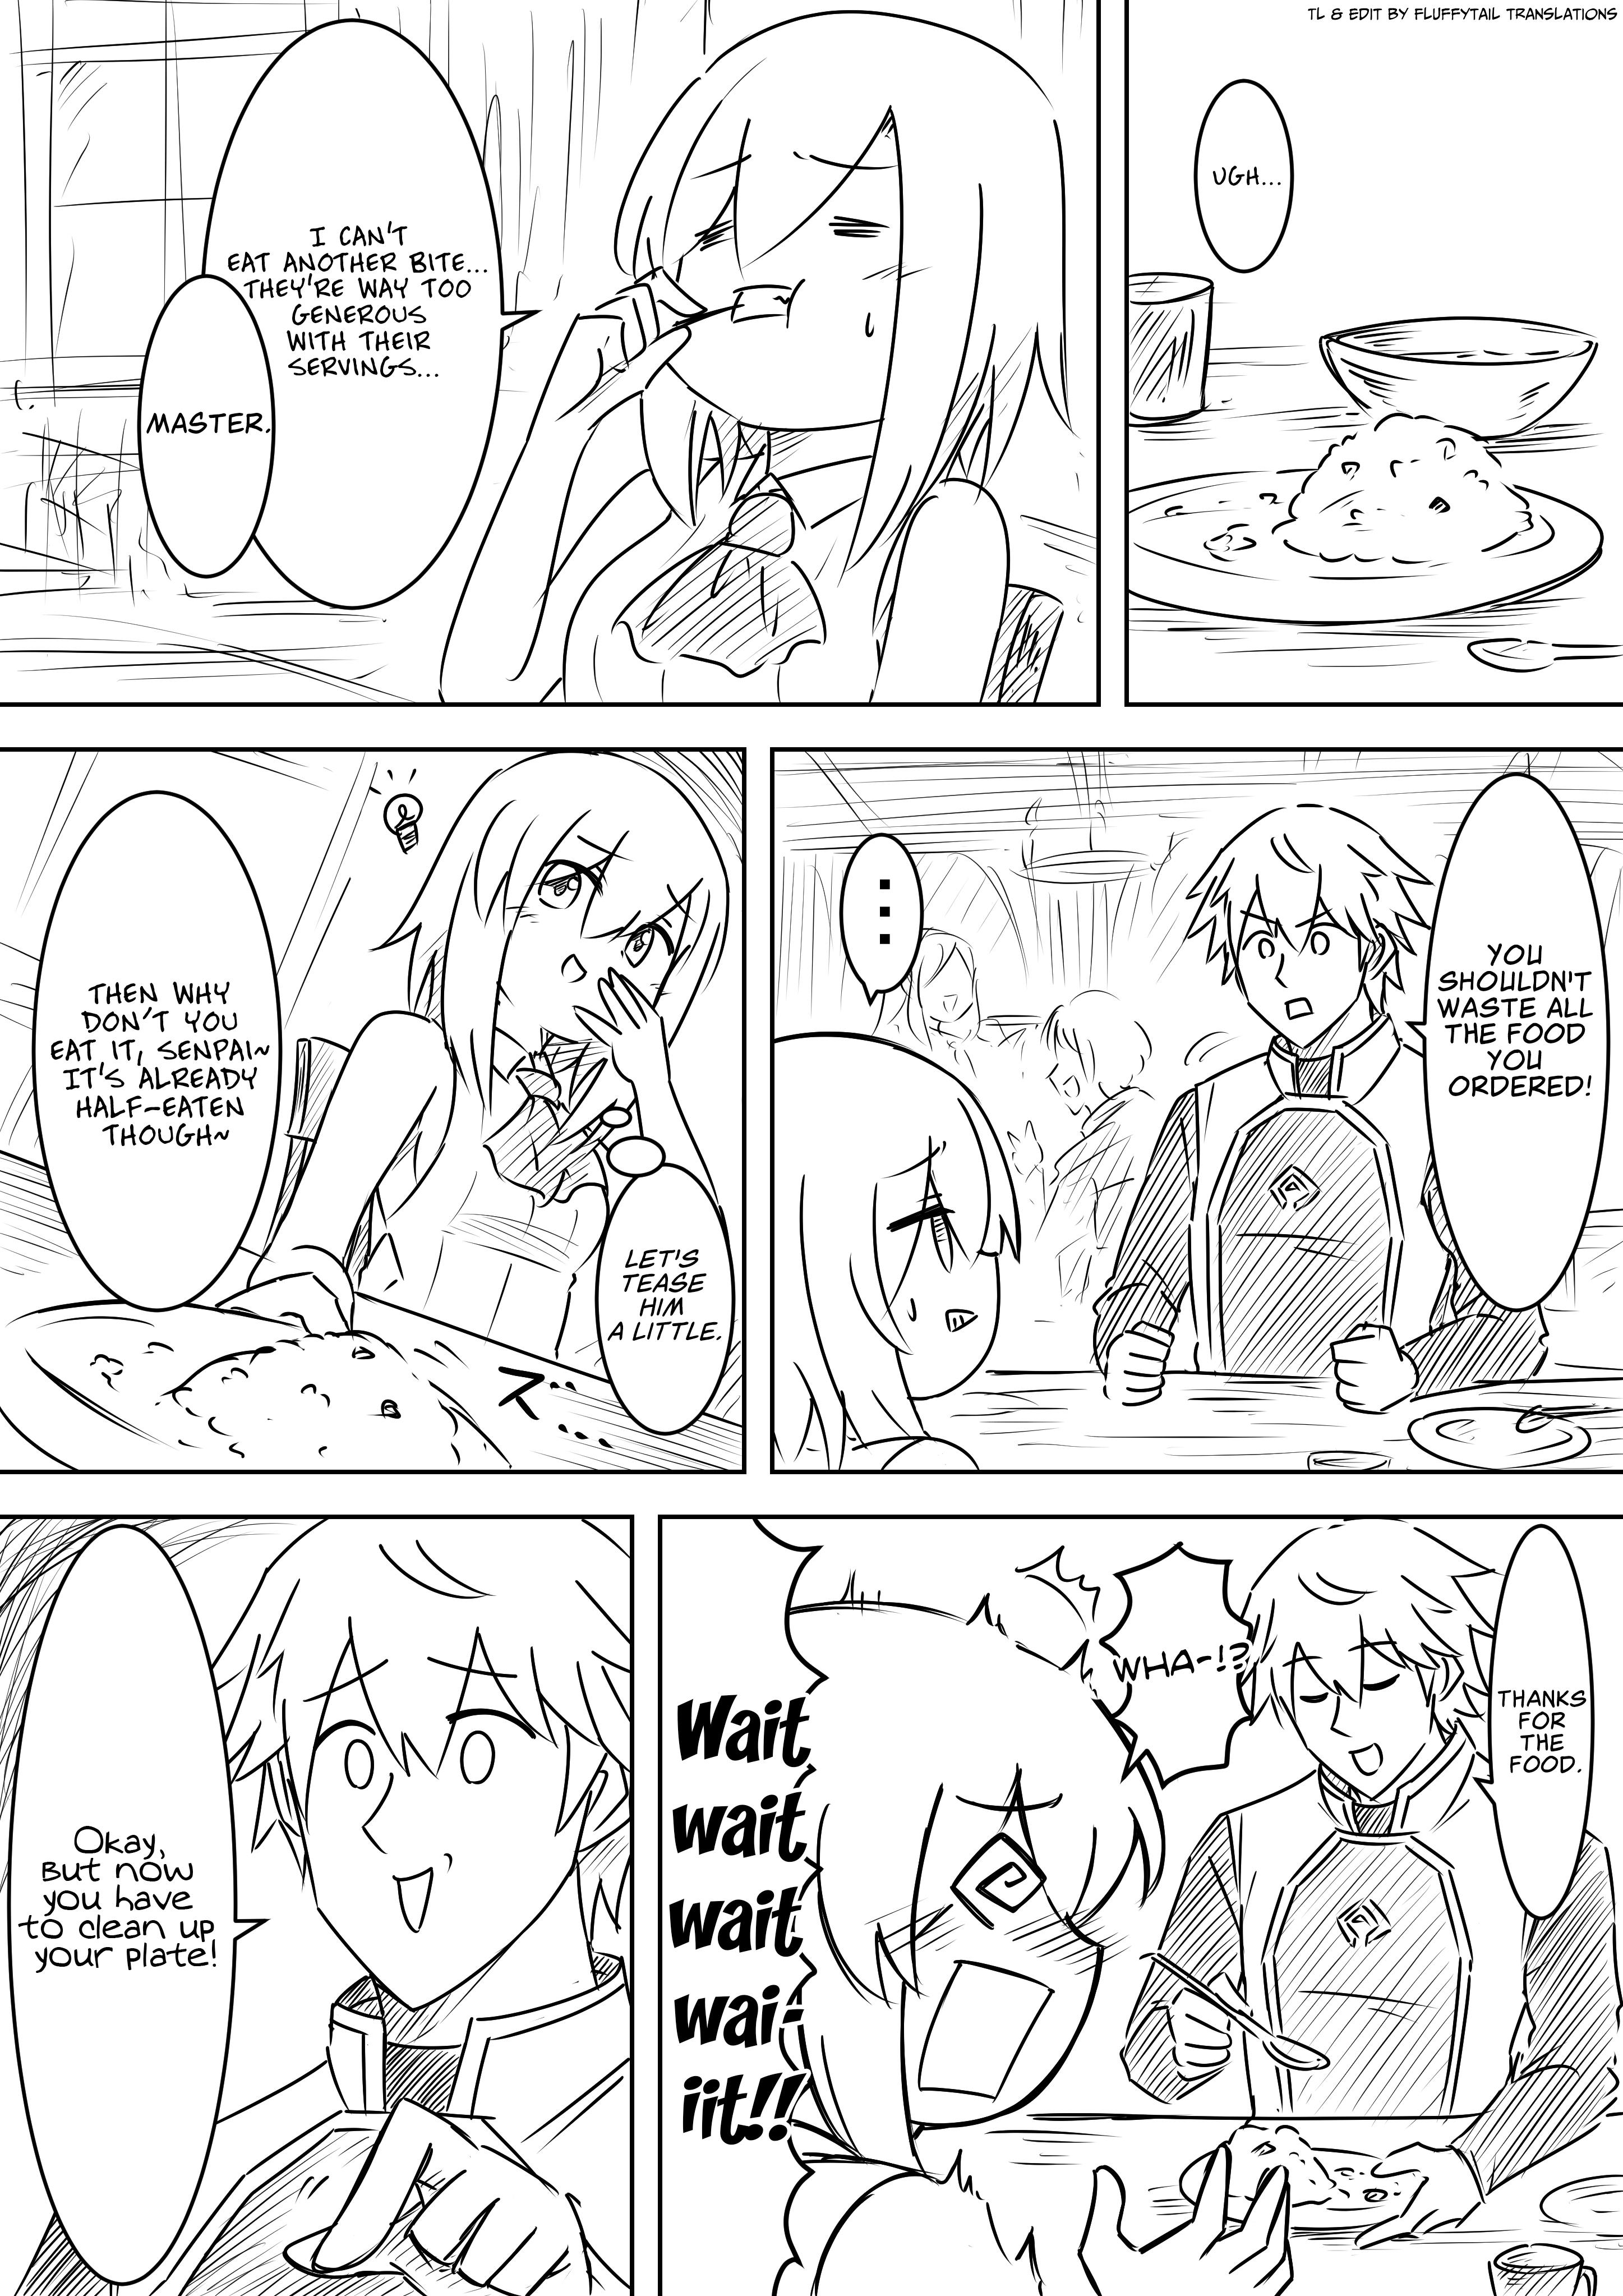 Ebimaru Misadventures (Webcomic) - Page 1